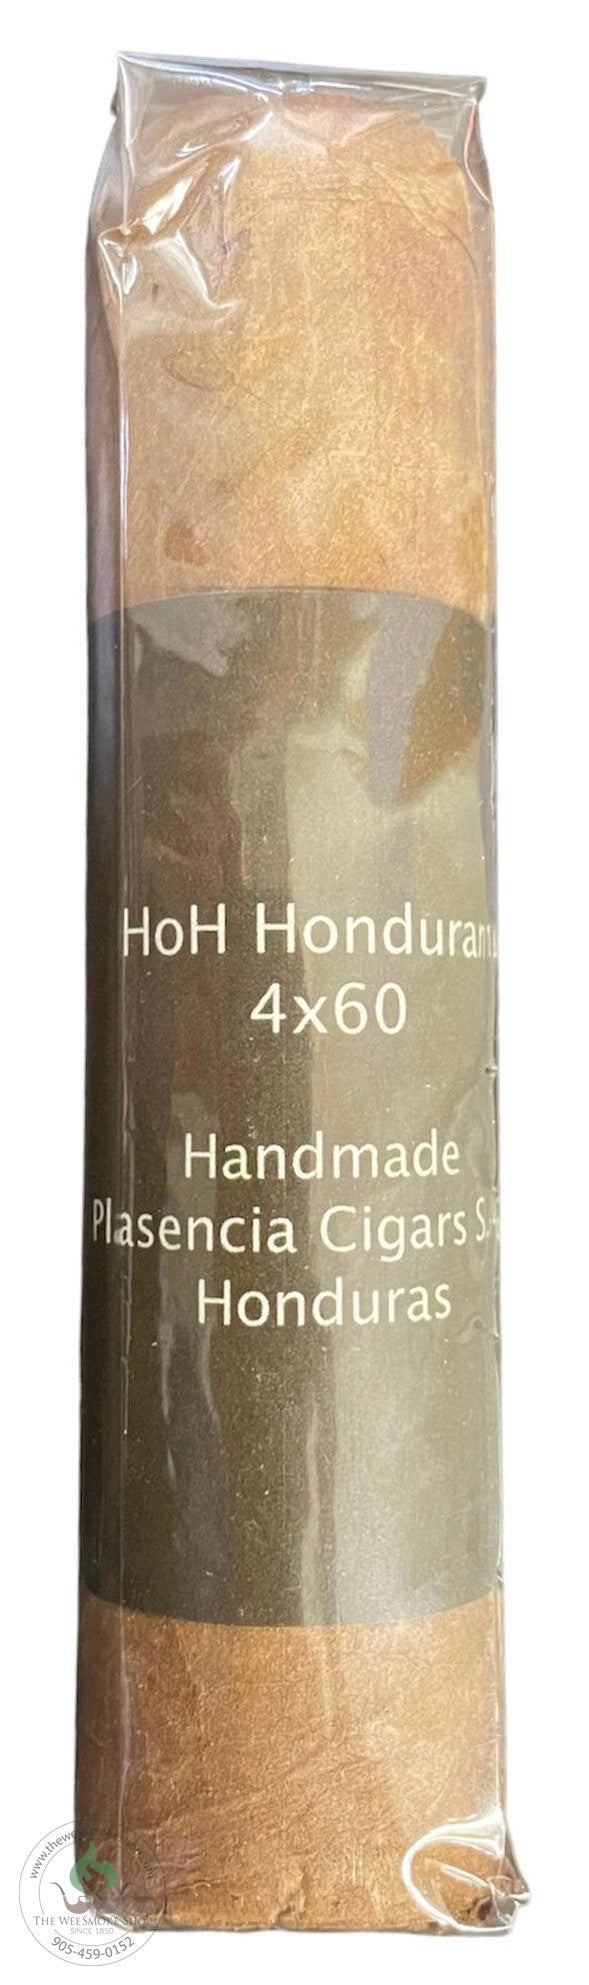 HoH - Honduran 4x60 - The Wee Smoke Shop